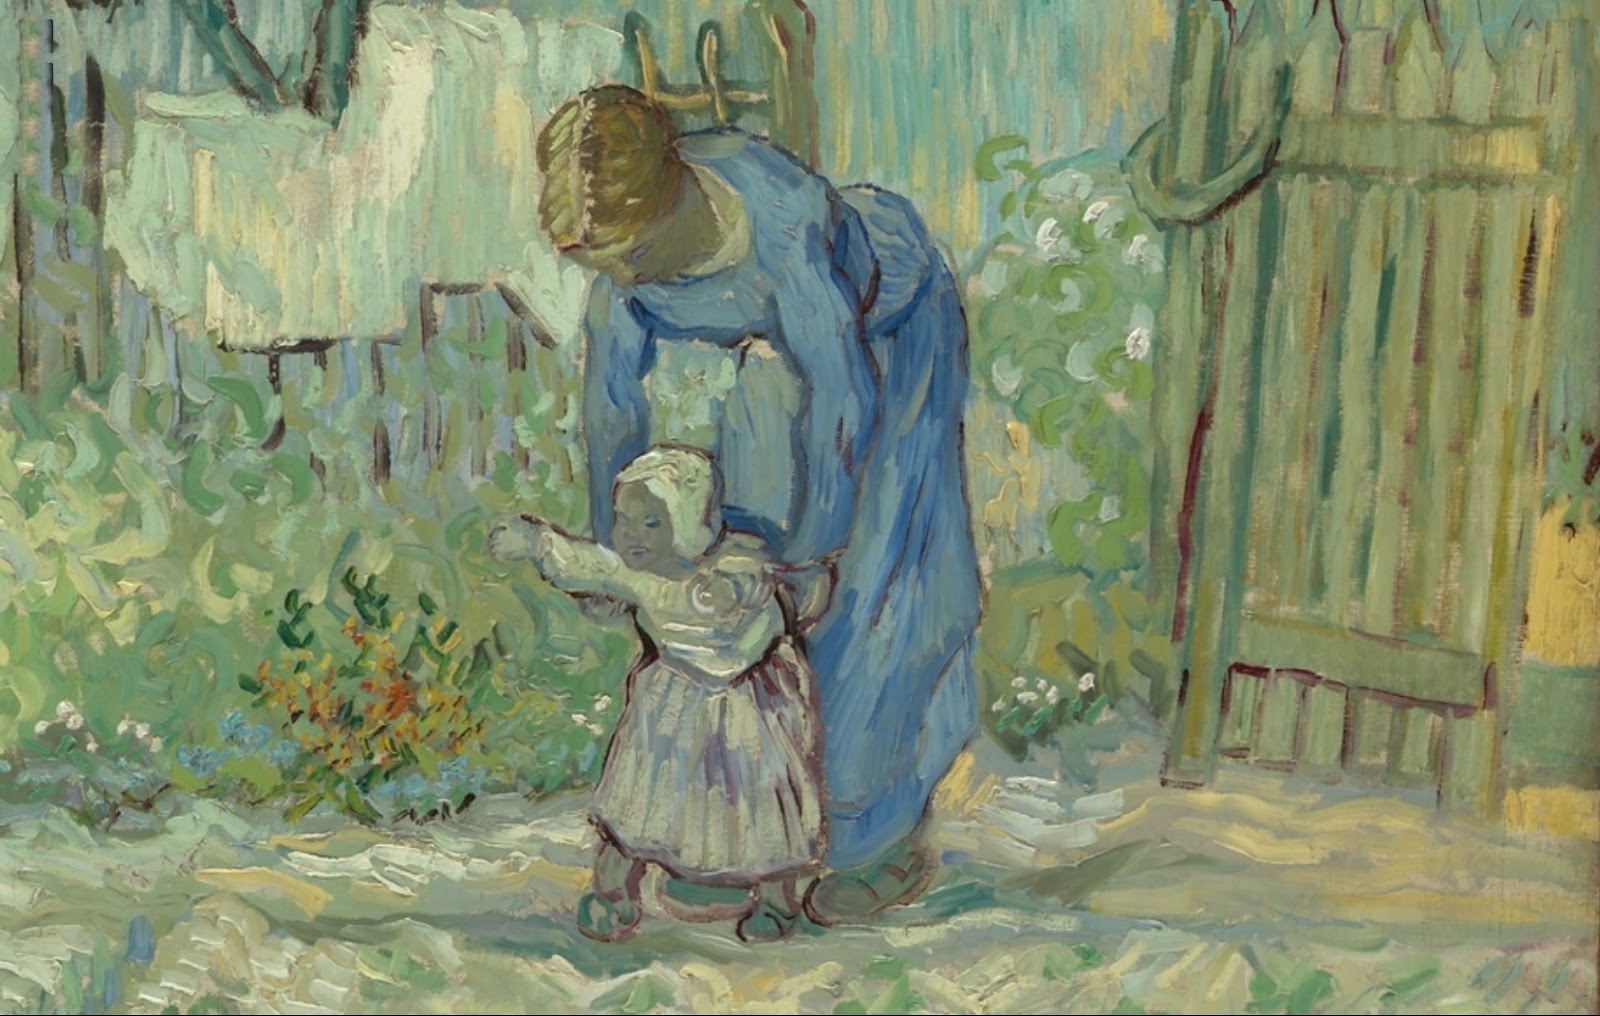 Vincent+Van+Gogh-1853-1890 (771).jpg